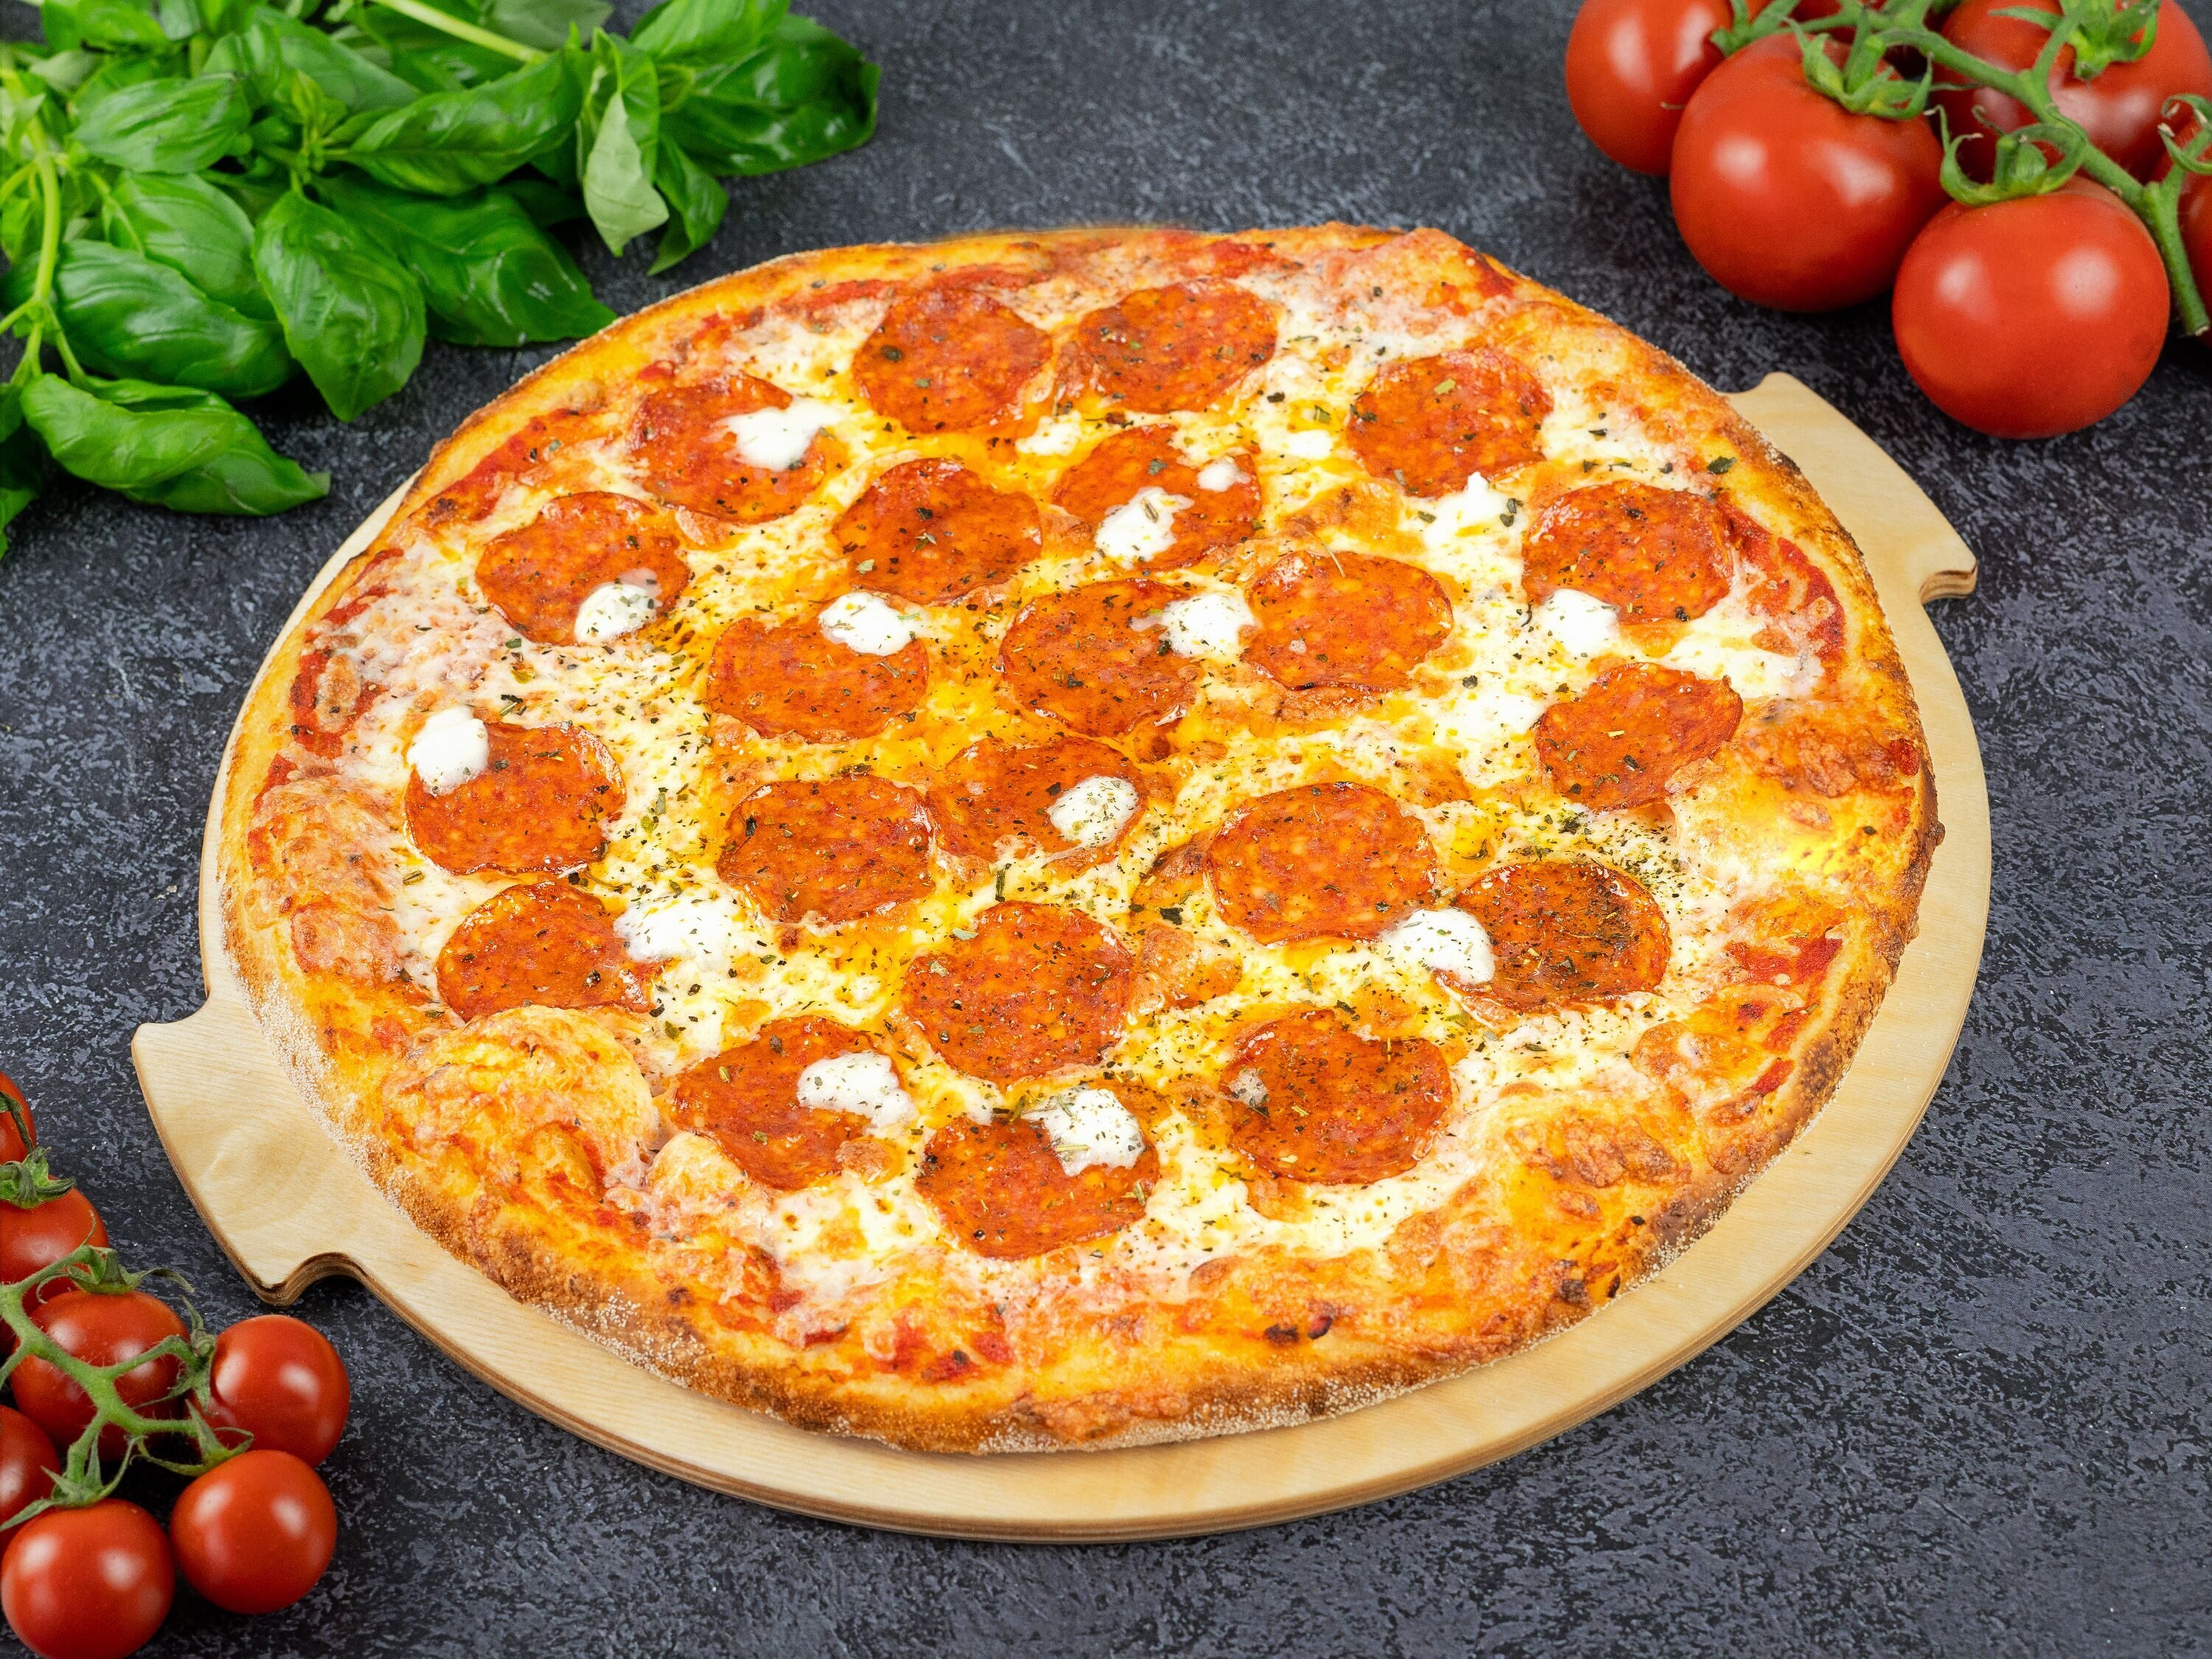 средняя цена пиццы пепперони фото 101